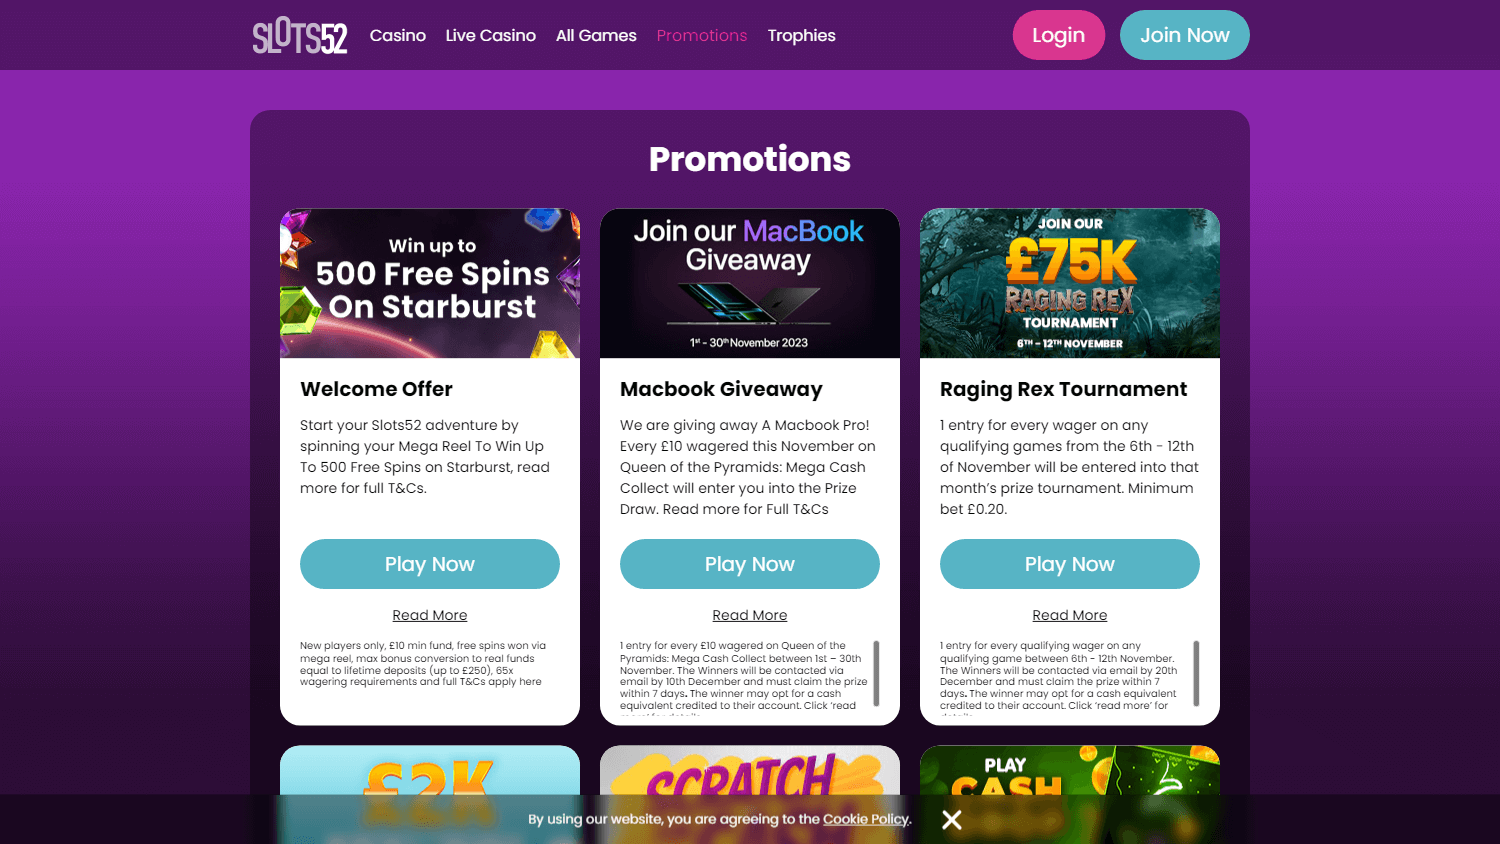 slots52_casino_promotions_desktop